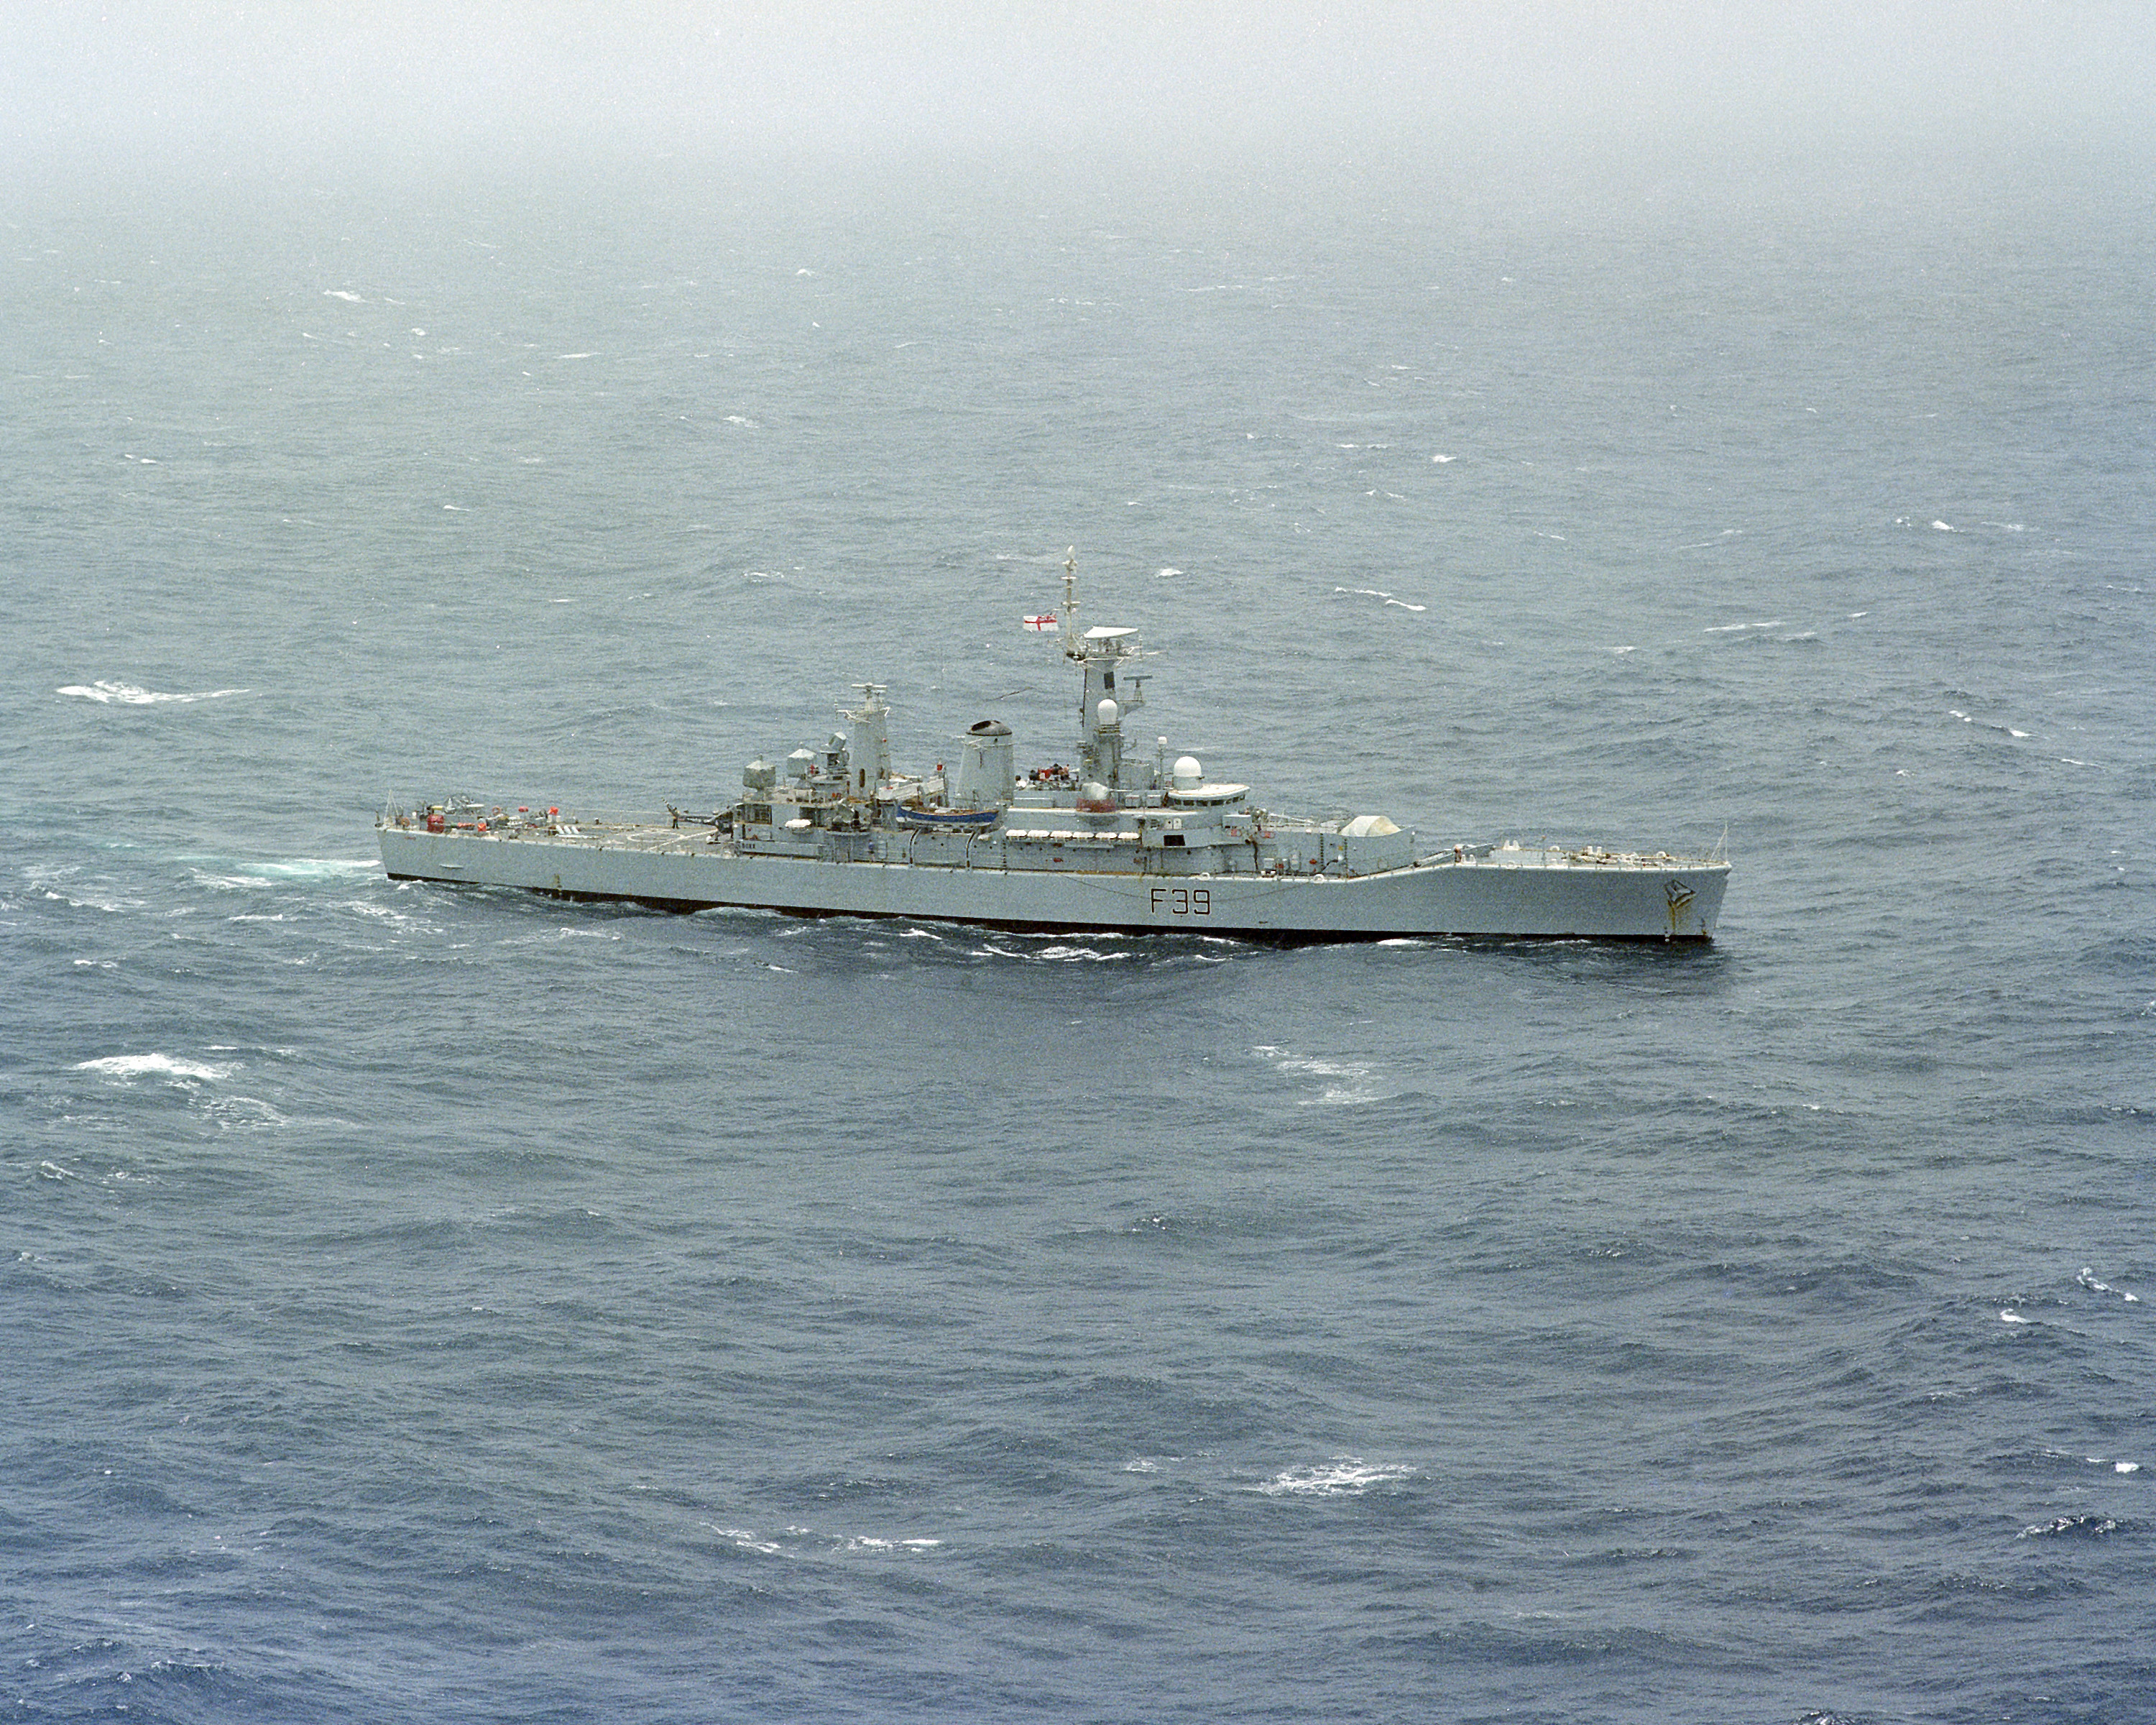 HMS_Naiad_F39_1982.jpeg